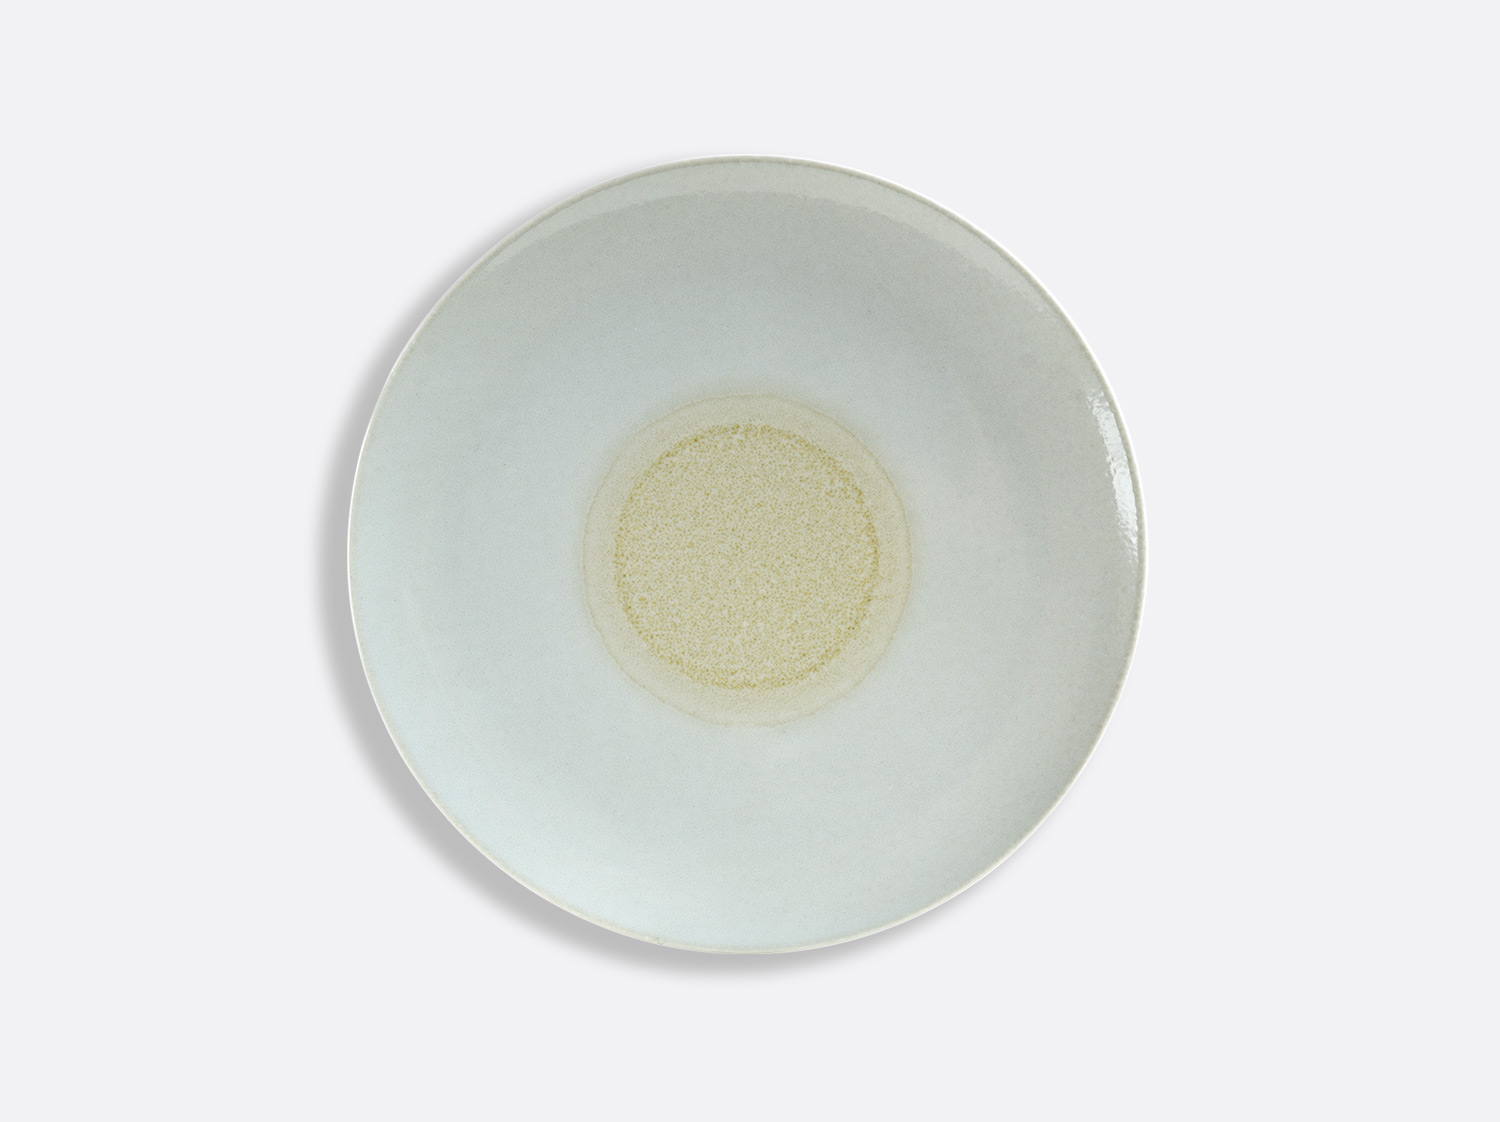 China Ultra flat plate 11.6" of the collection Iris Ivoire | Bernardaud